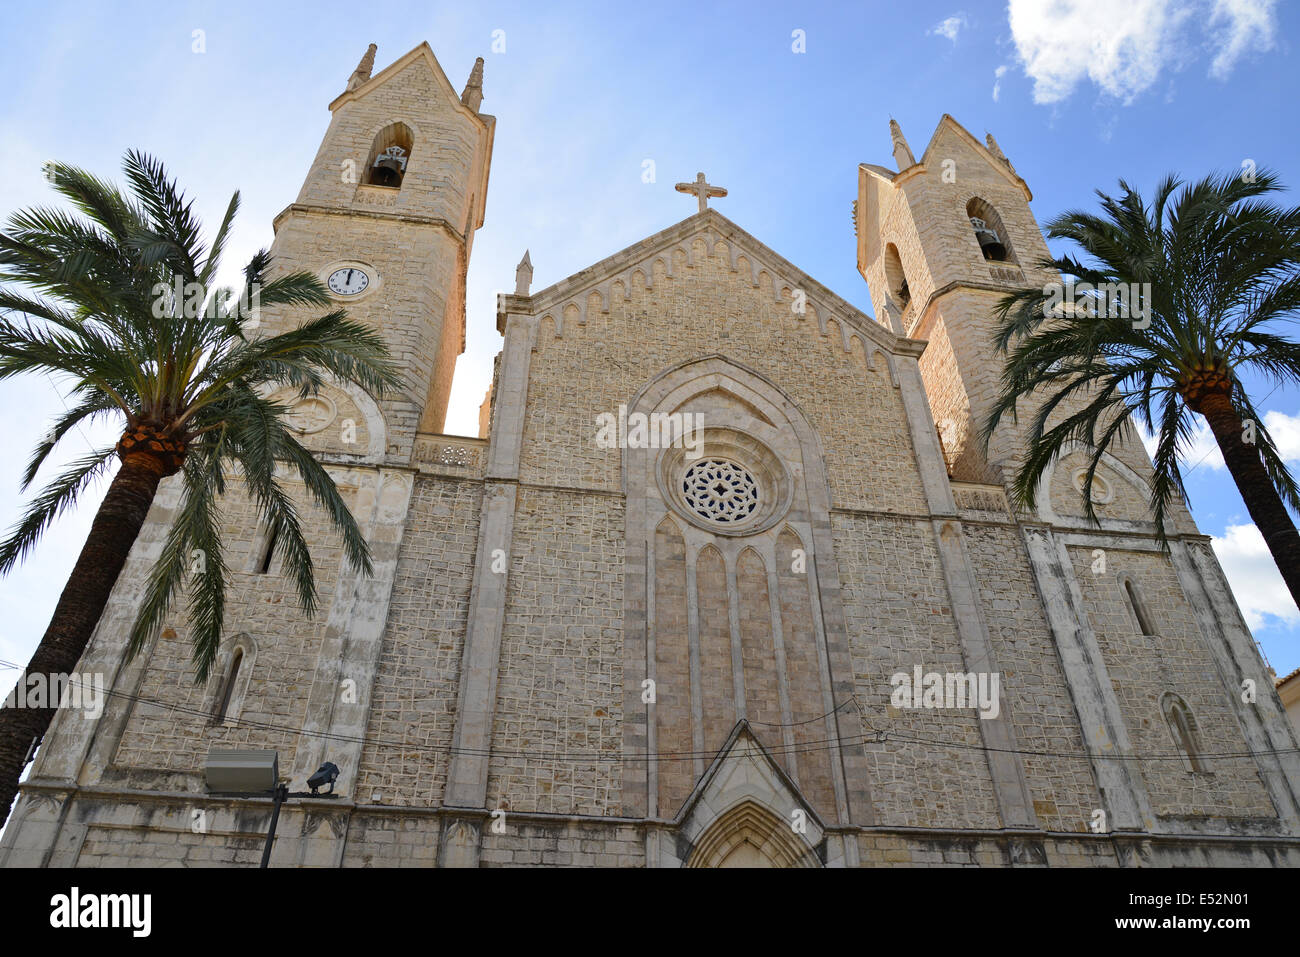 Cathedral of the Pure Mother Mary (Catedral de la Marina) Placa del Rei Jaume I, Benissa, Alicante Province, Kingdom of Spain Stock Photo